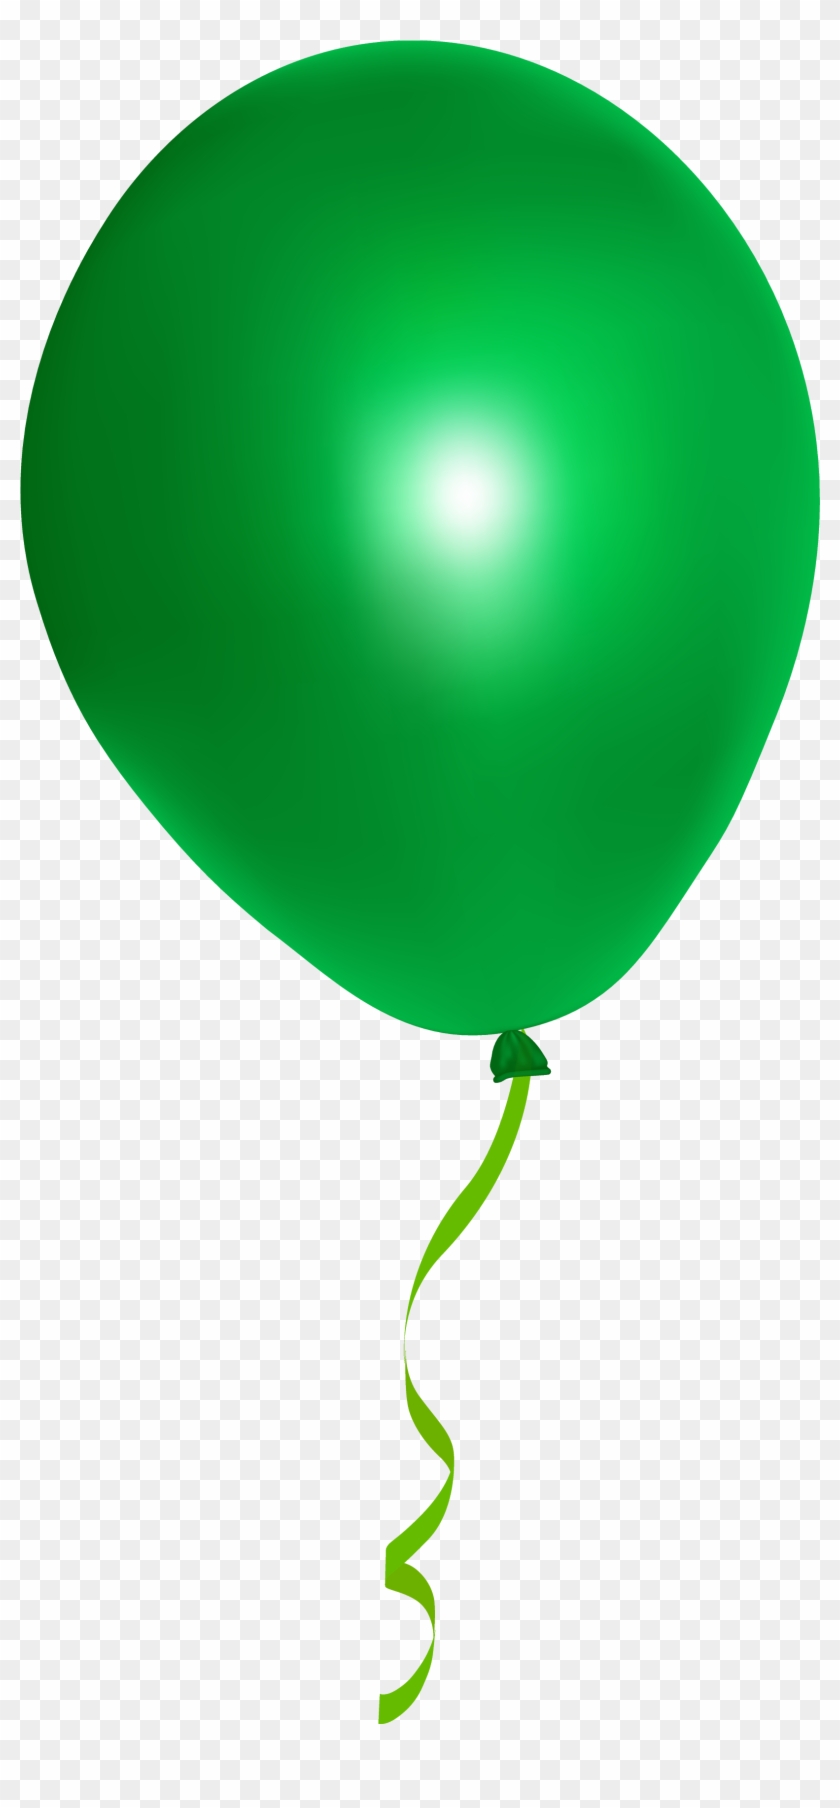 Green Balloon Clipart - Green Balloon Png #145617